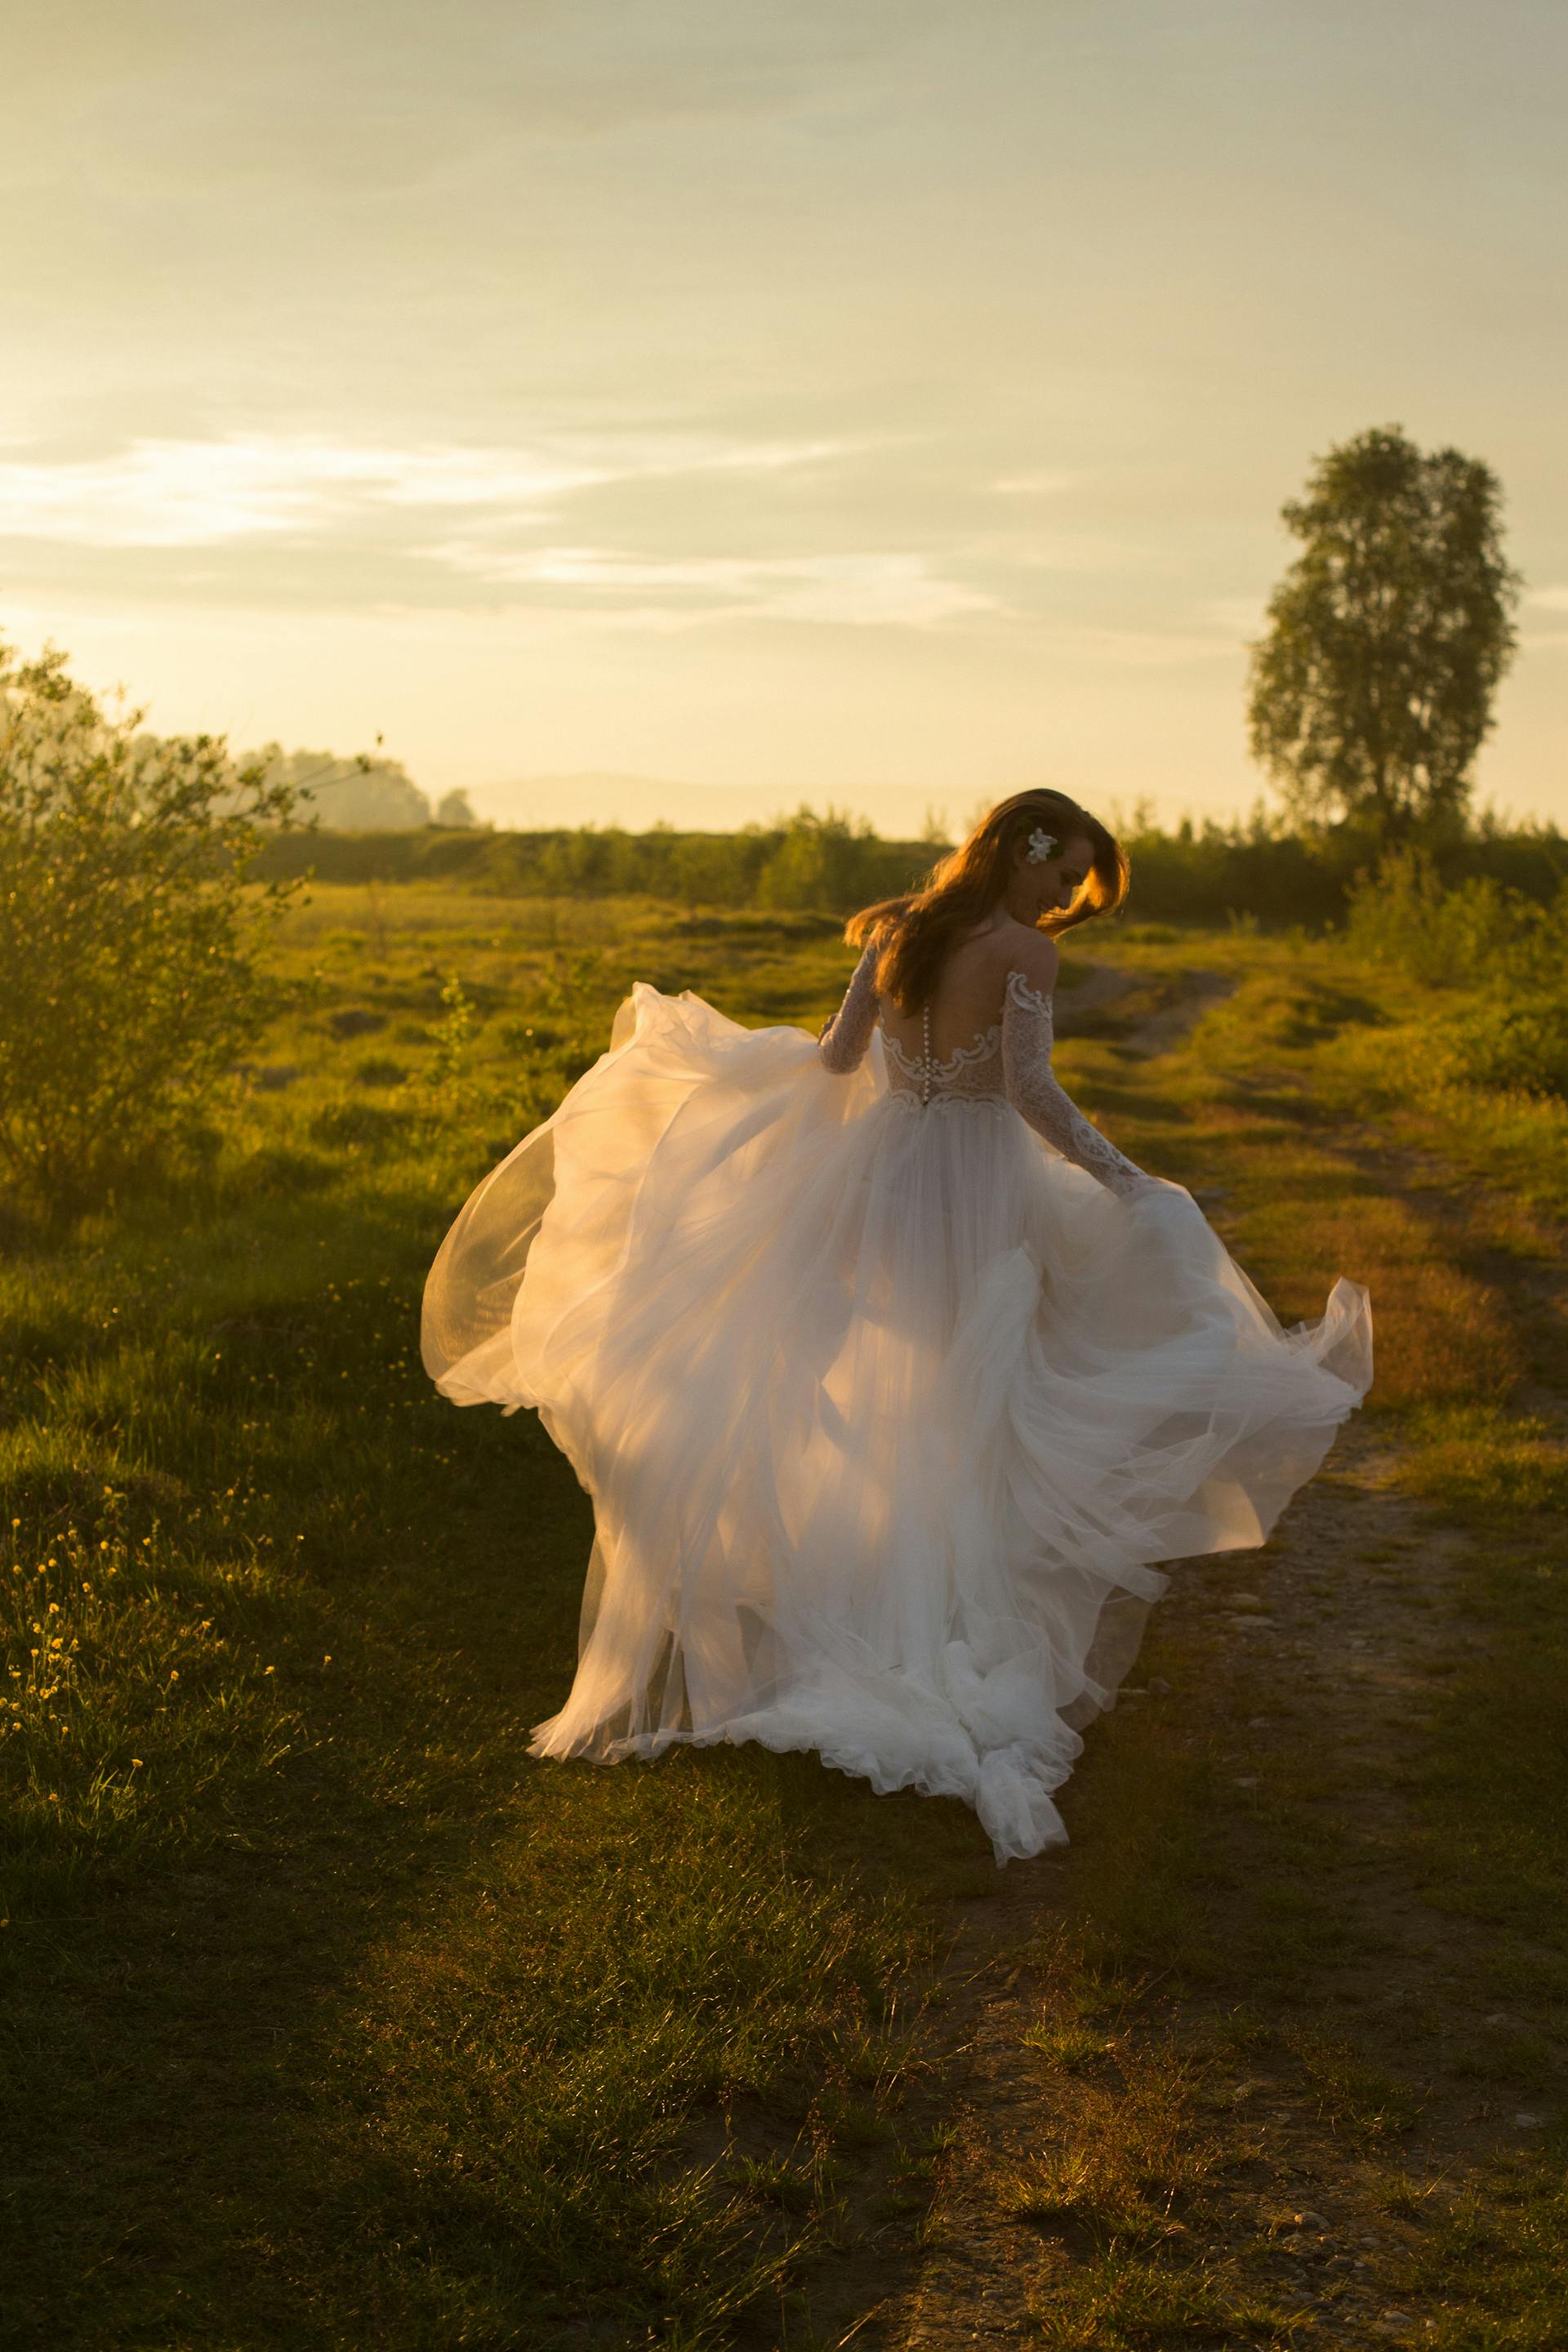 A bride walking on grass | Source: Pexels